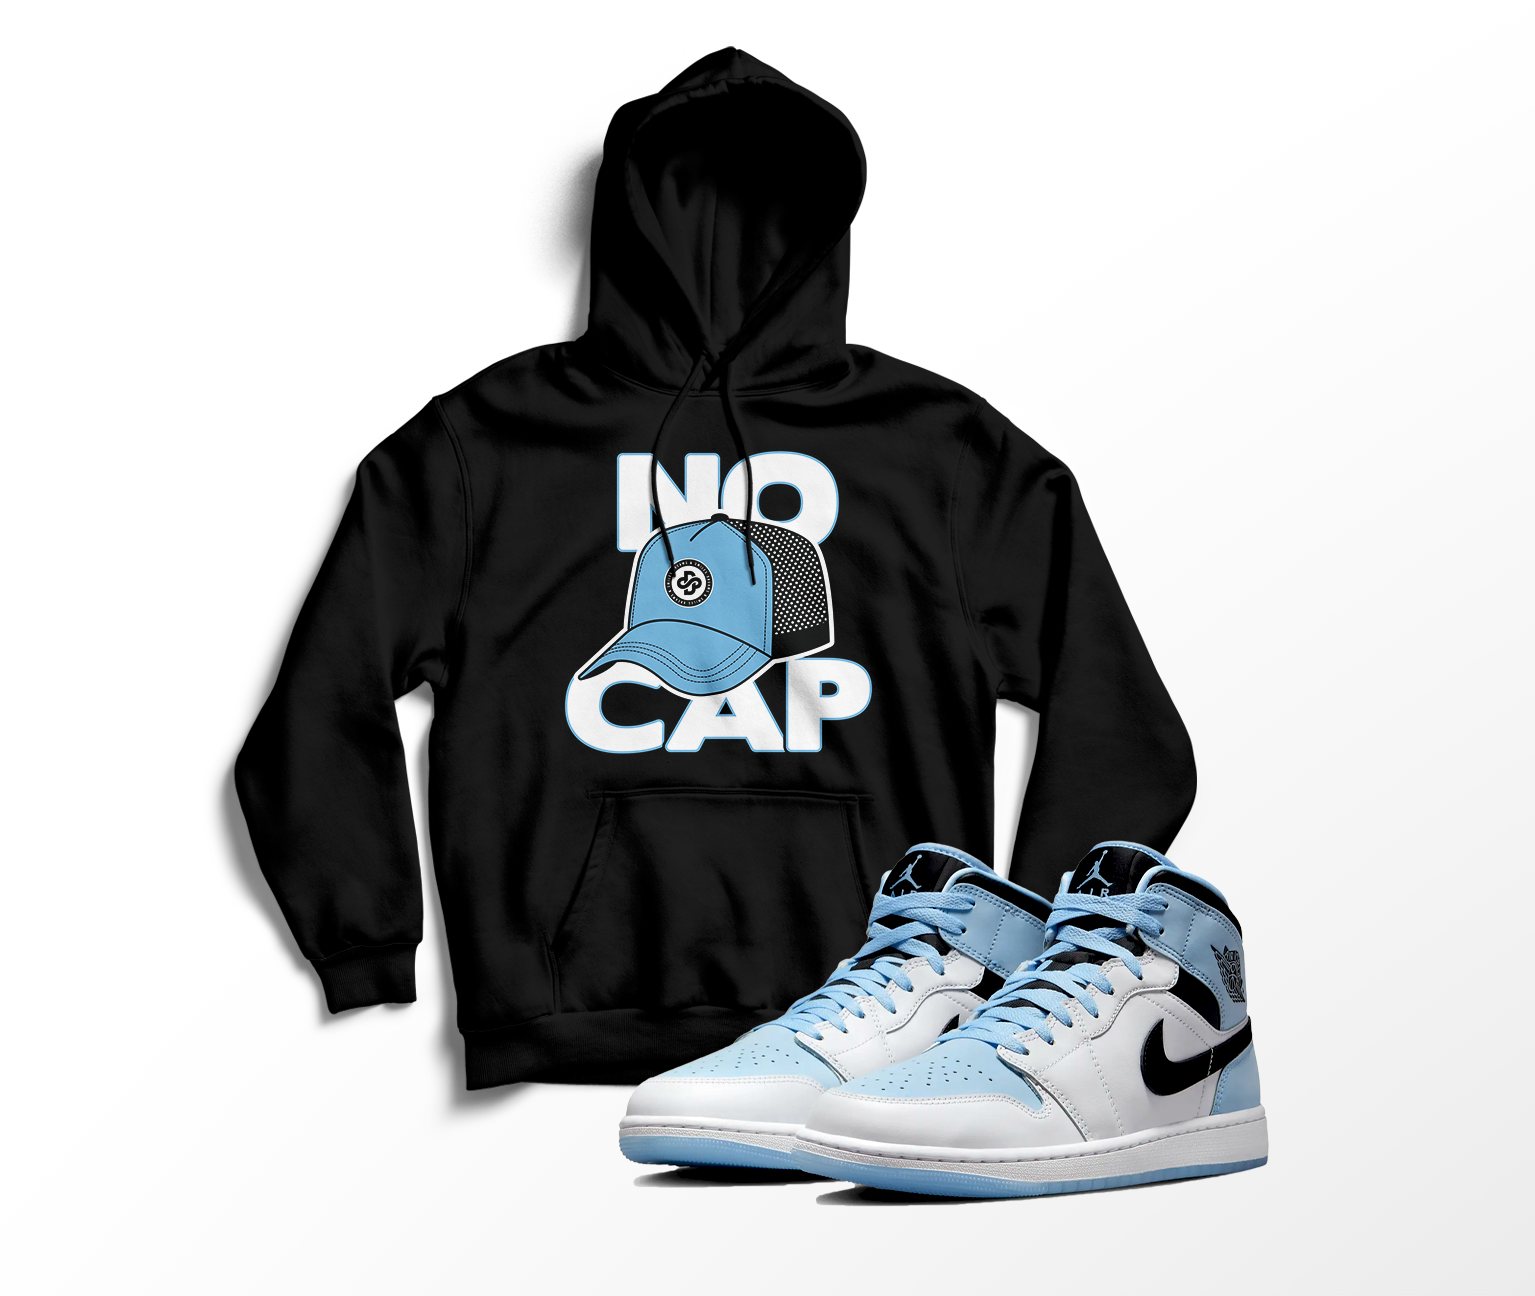 'No Cap' Custom Graphic Hoodie To Match Air Jordan 1 White Ice